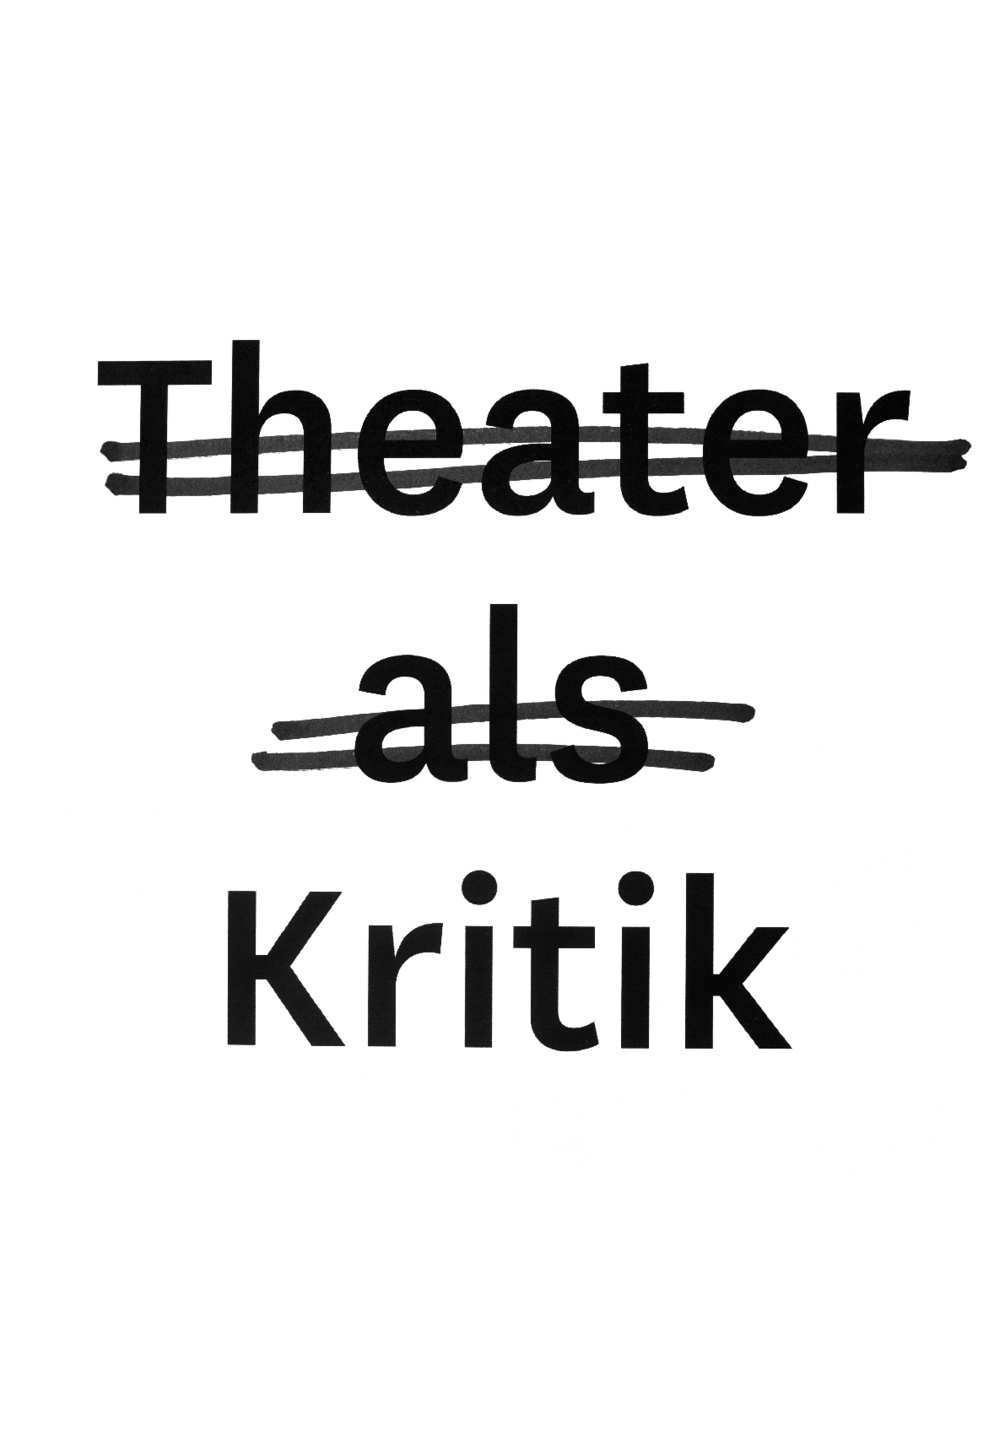 theater-as-critique-slip-13-1005x1435px